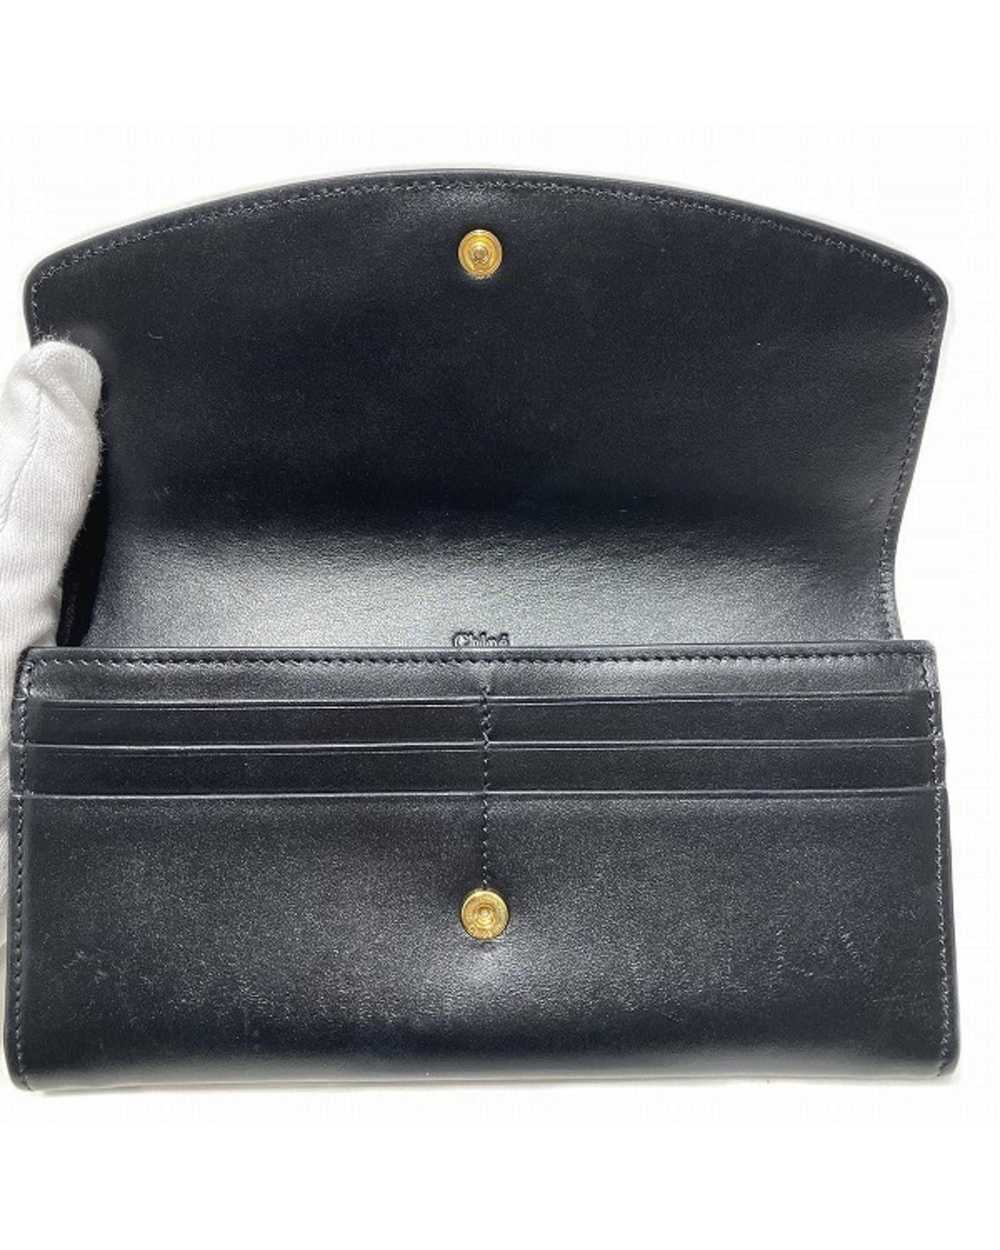 Chloe Refined Black Leather Long Wallet for Women - image 2